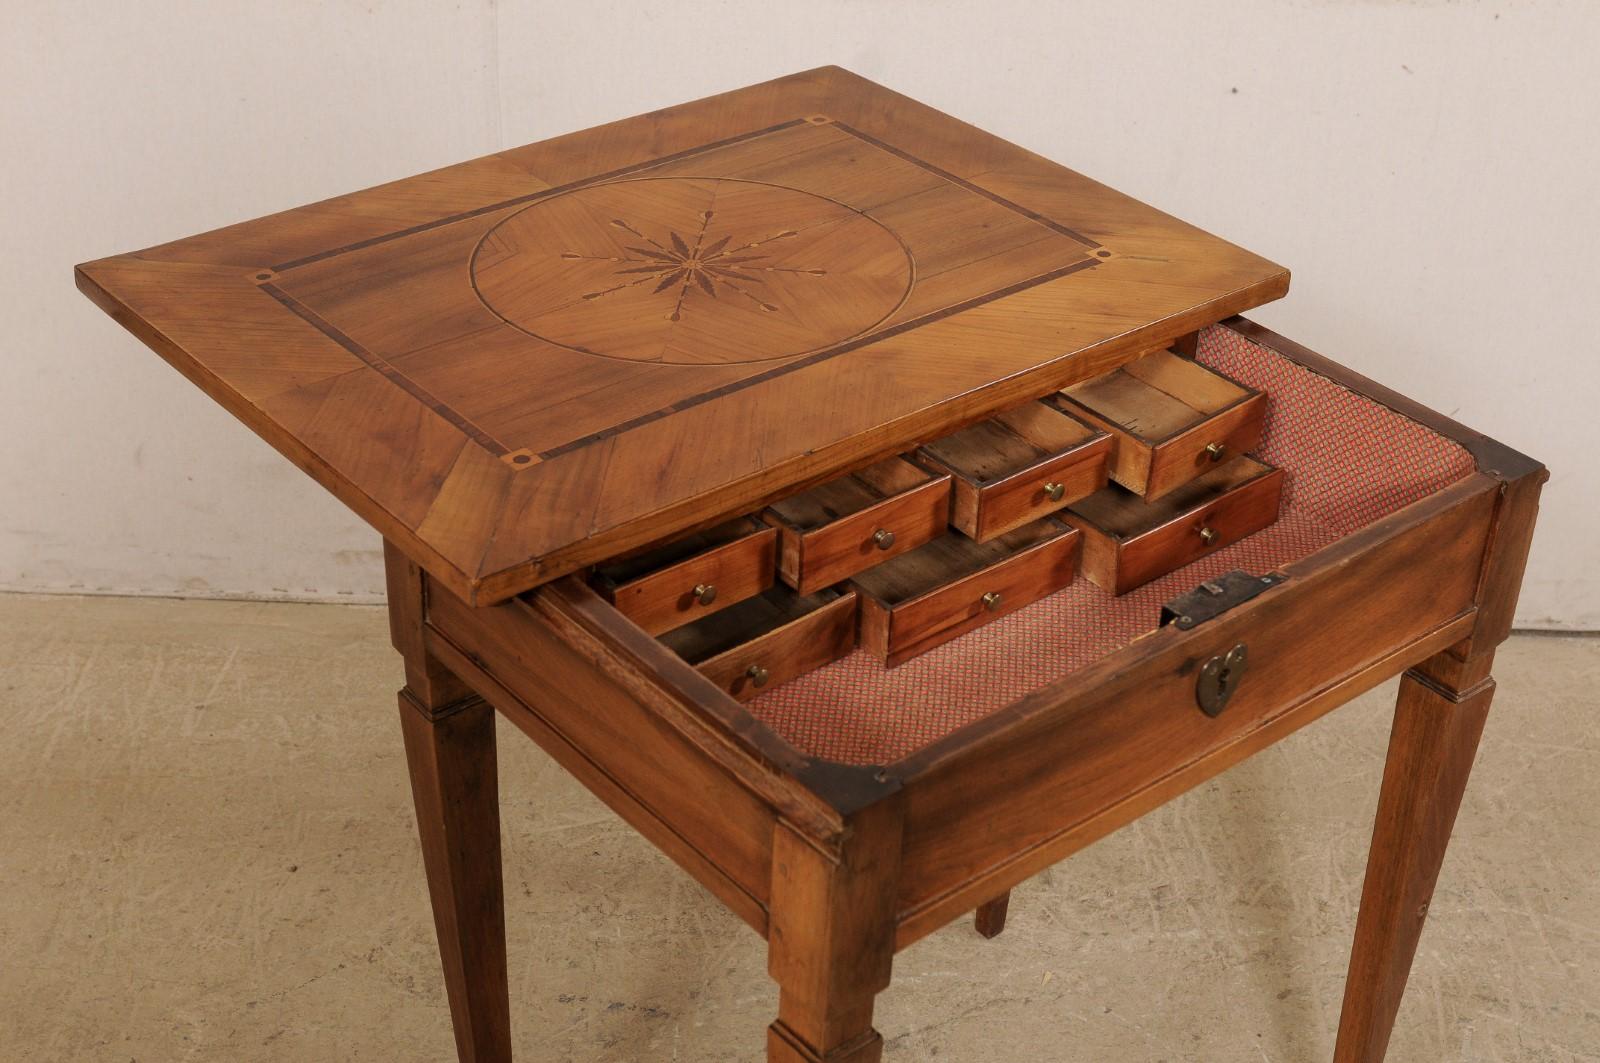 19th Century 19th C. Italian Writing Desk w/Decorative Inlay & Sliding Top for Hidden Storage For Sale